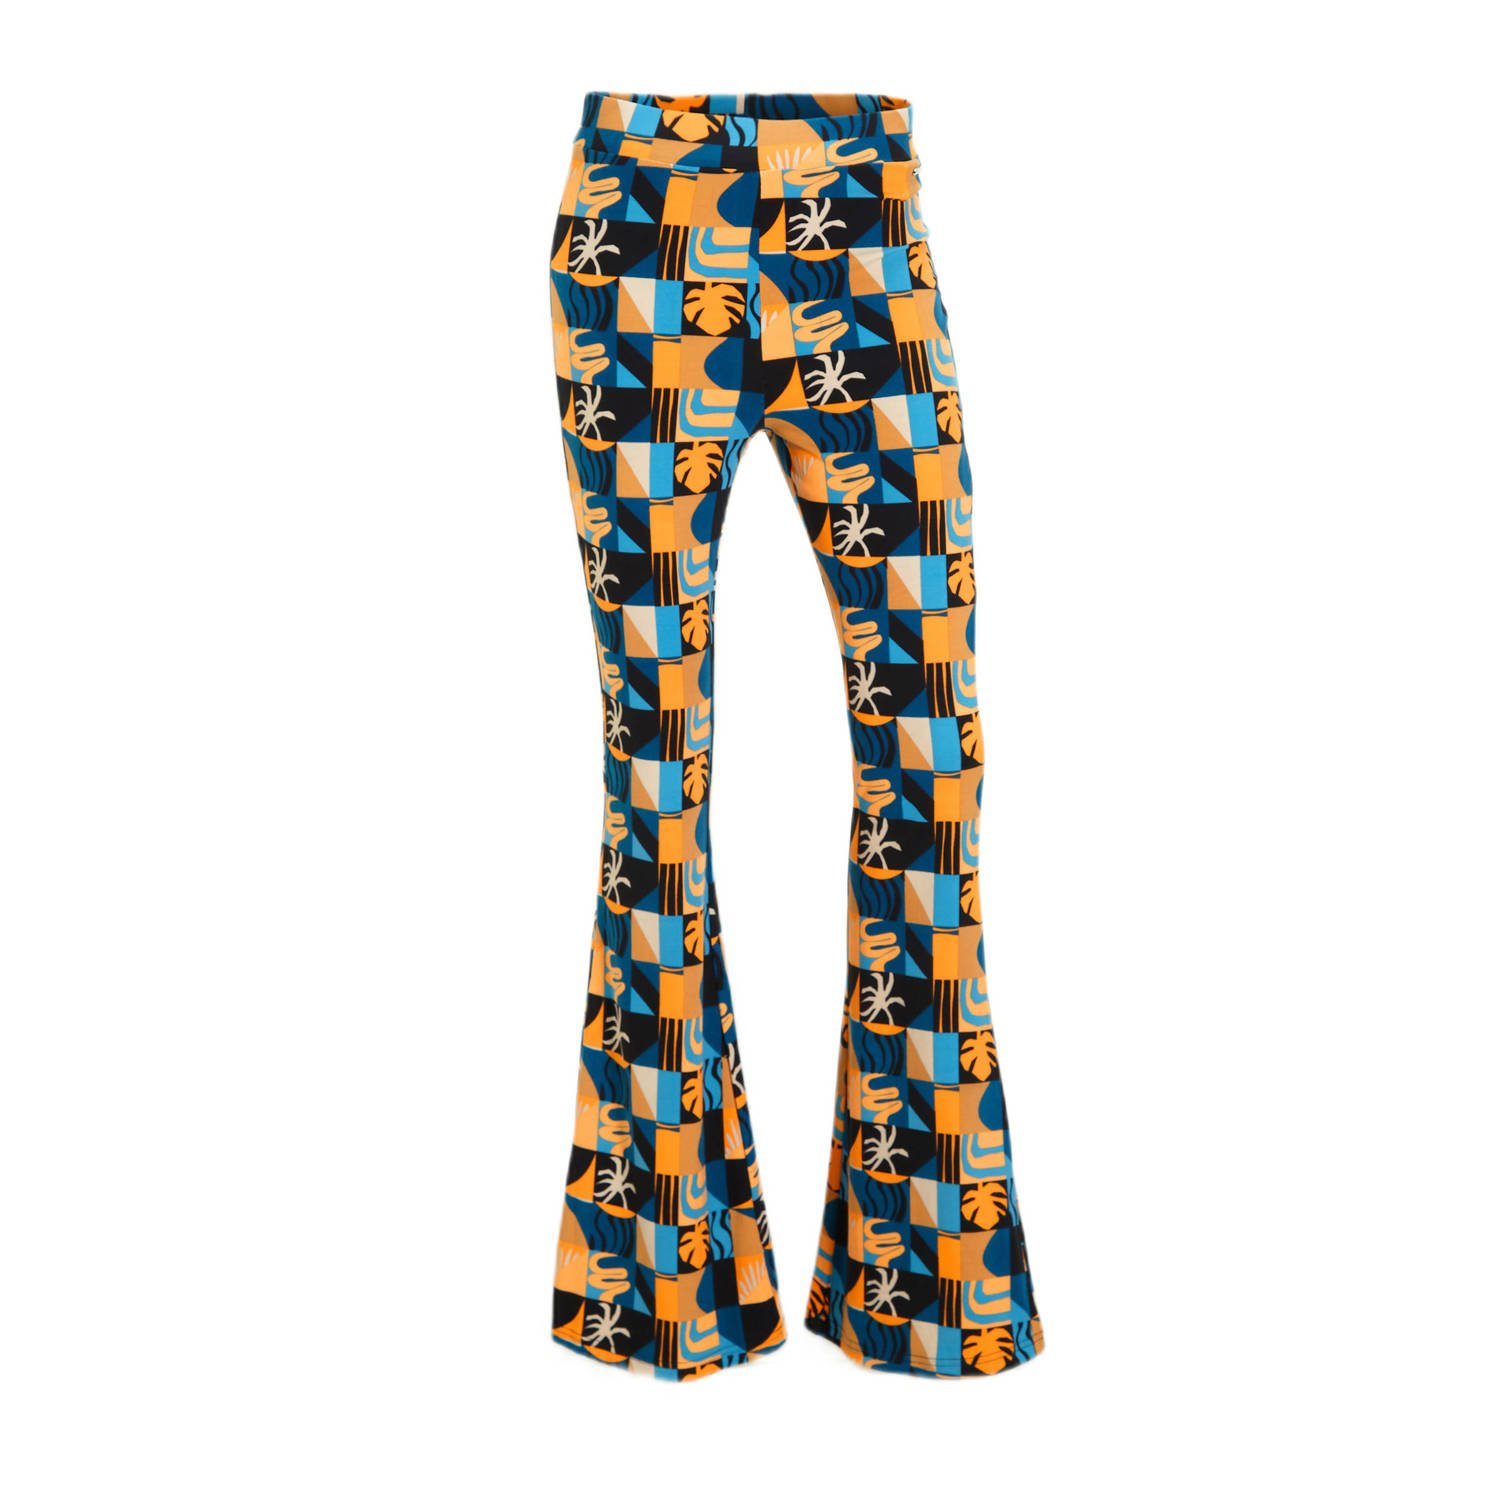 Colourful Rebel high waist flared broek Scenery met grafische print oranje blauw